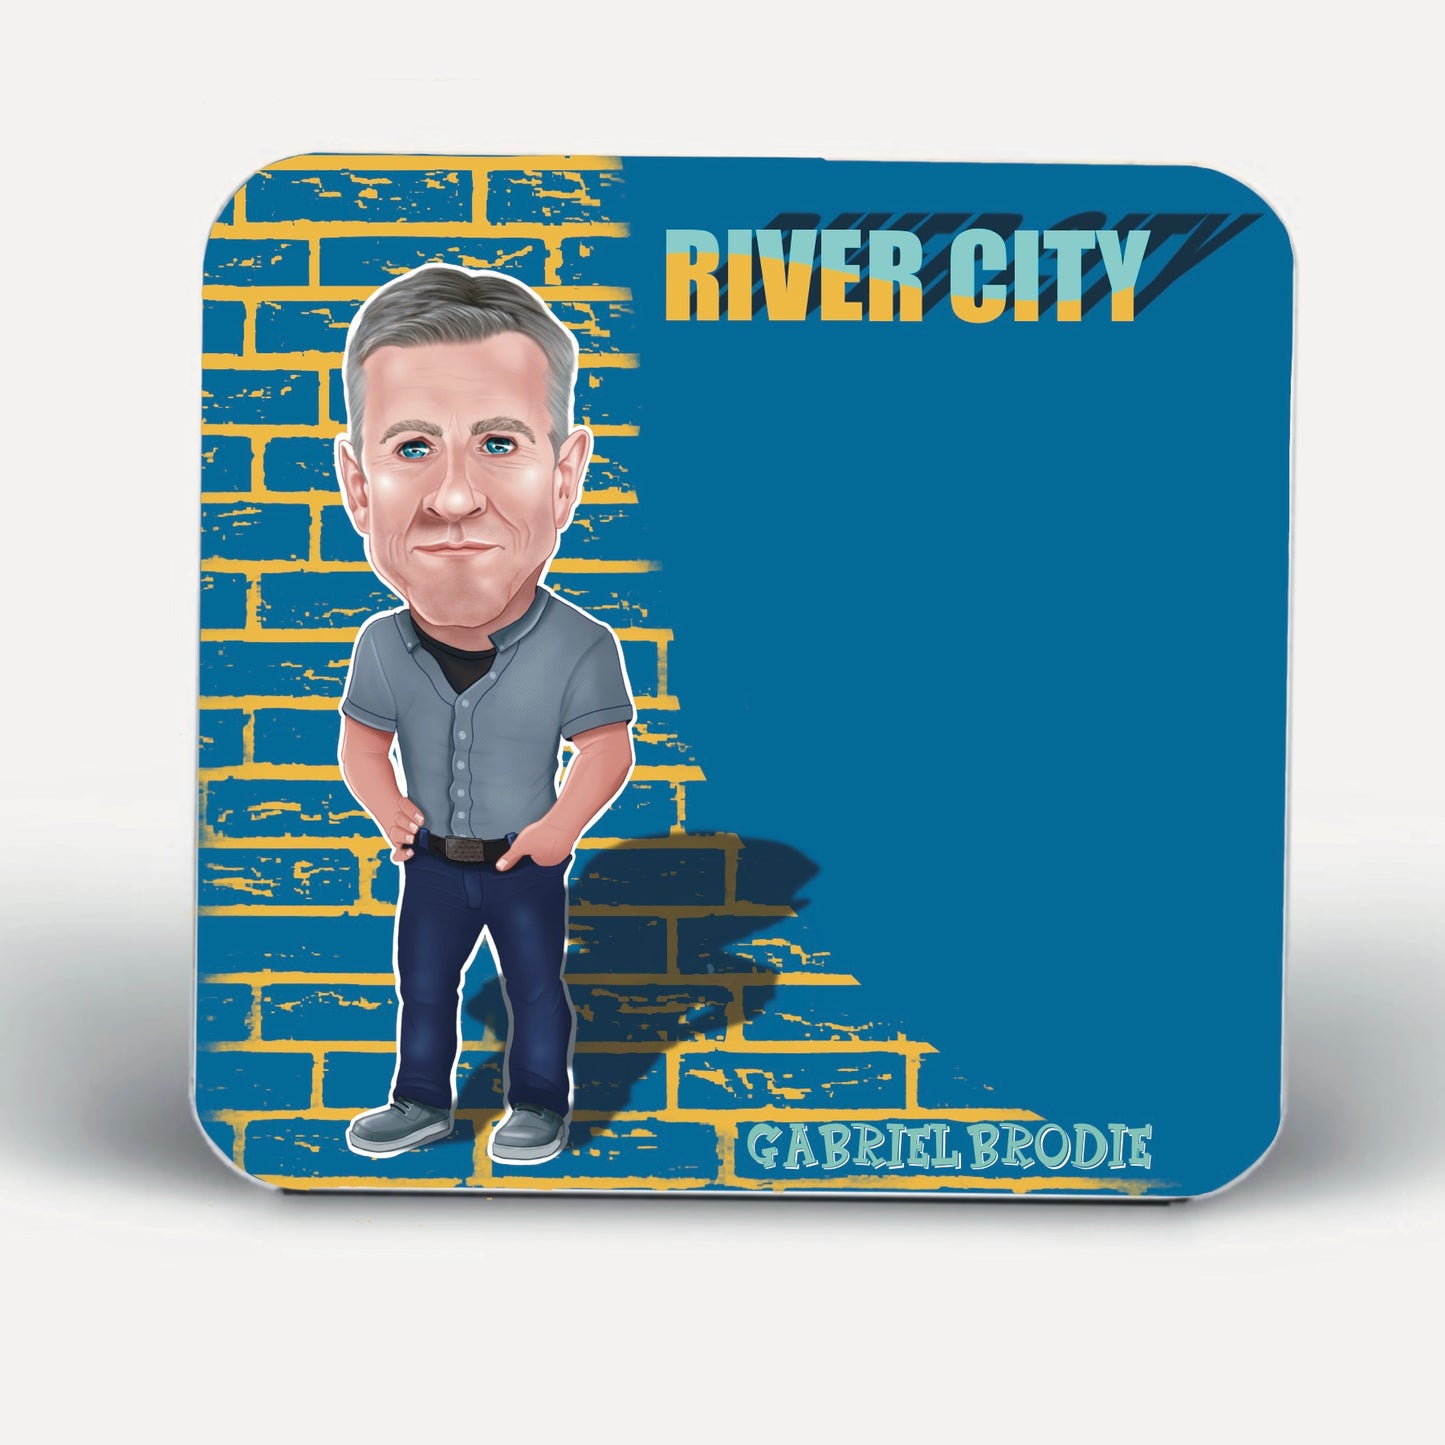 River City Coaster-Coasters Glesga Gabriel Brodie Xmas stocking fillers